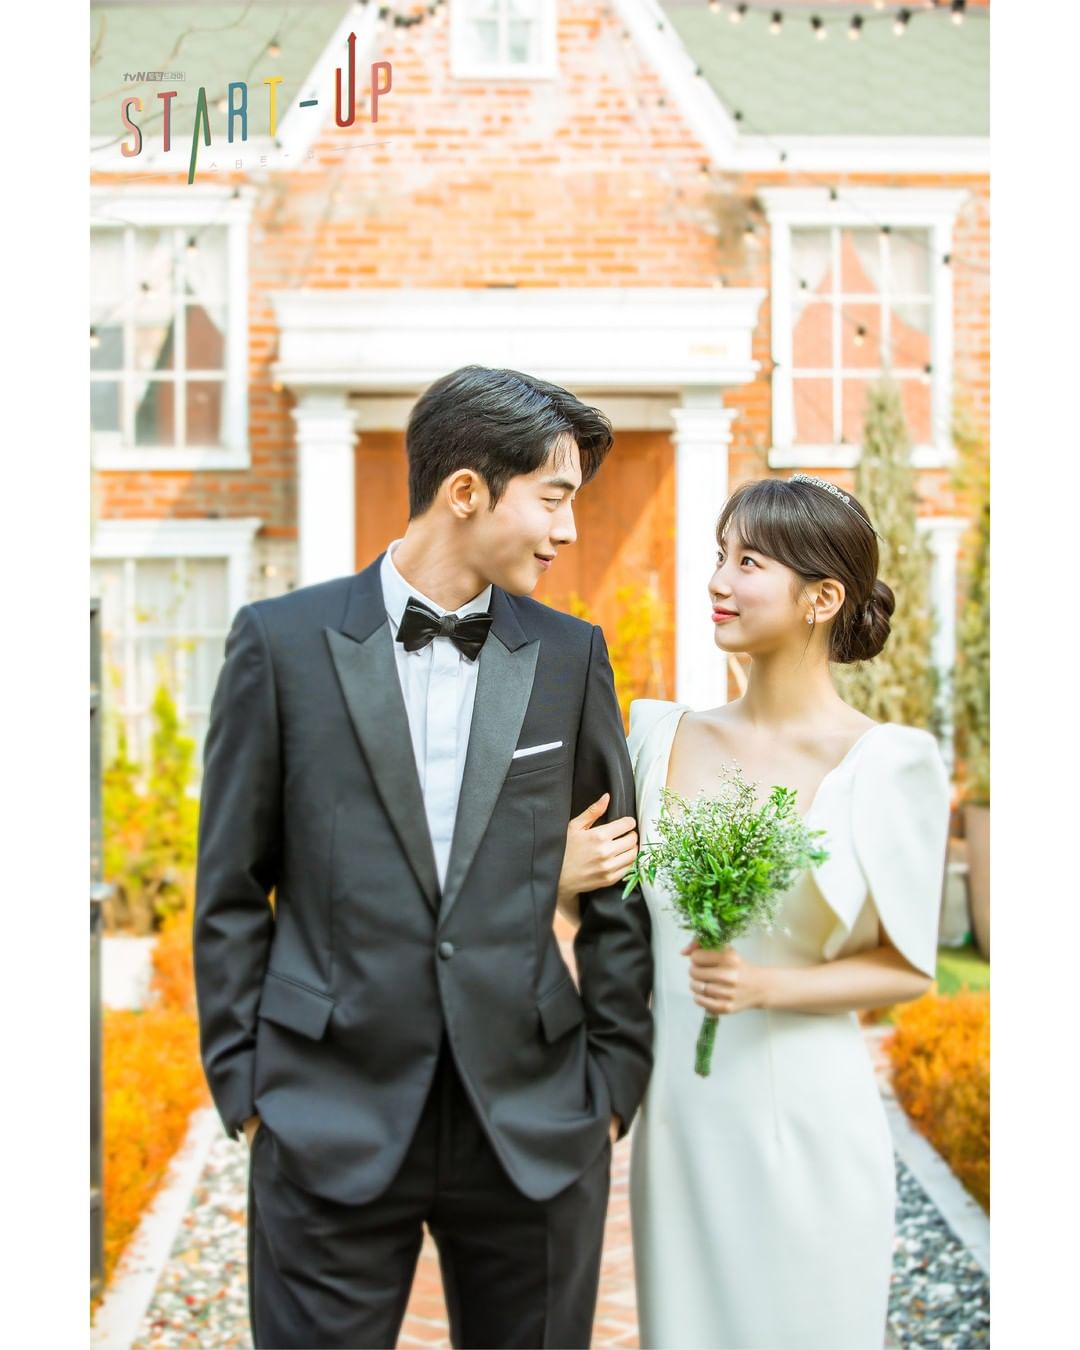 Start-Up Wedding Photos: Suzy And Nam Joo Hyuk